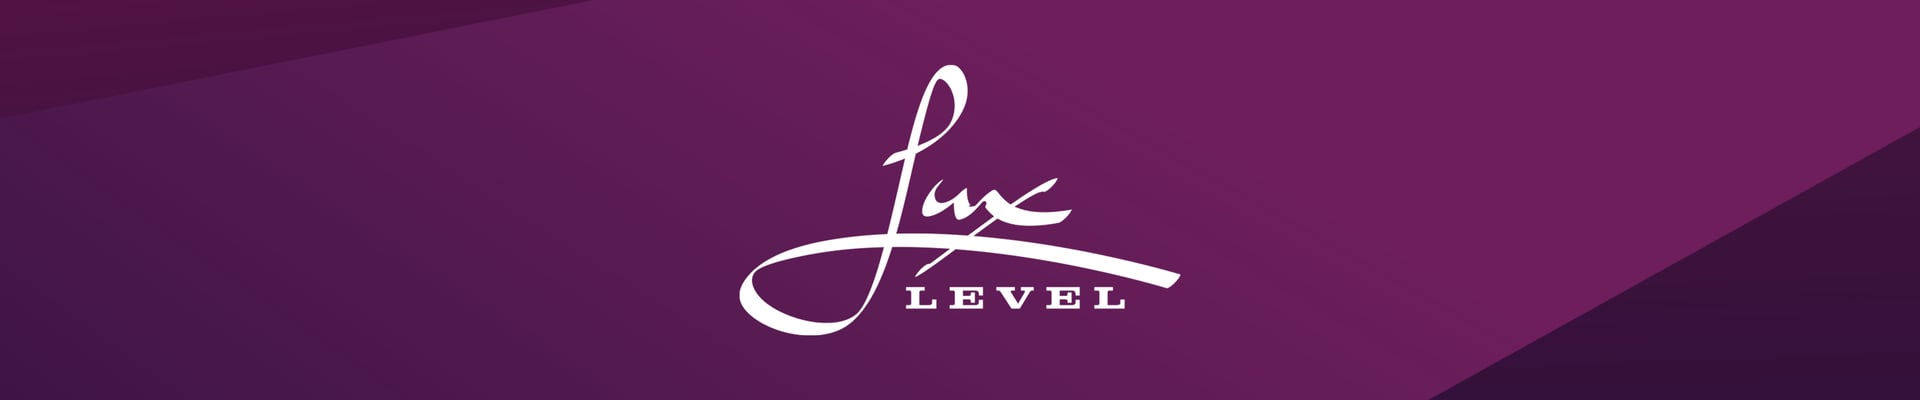 Lux Level